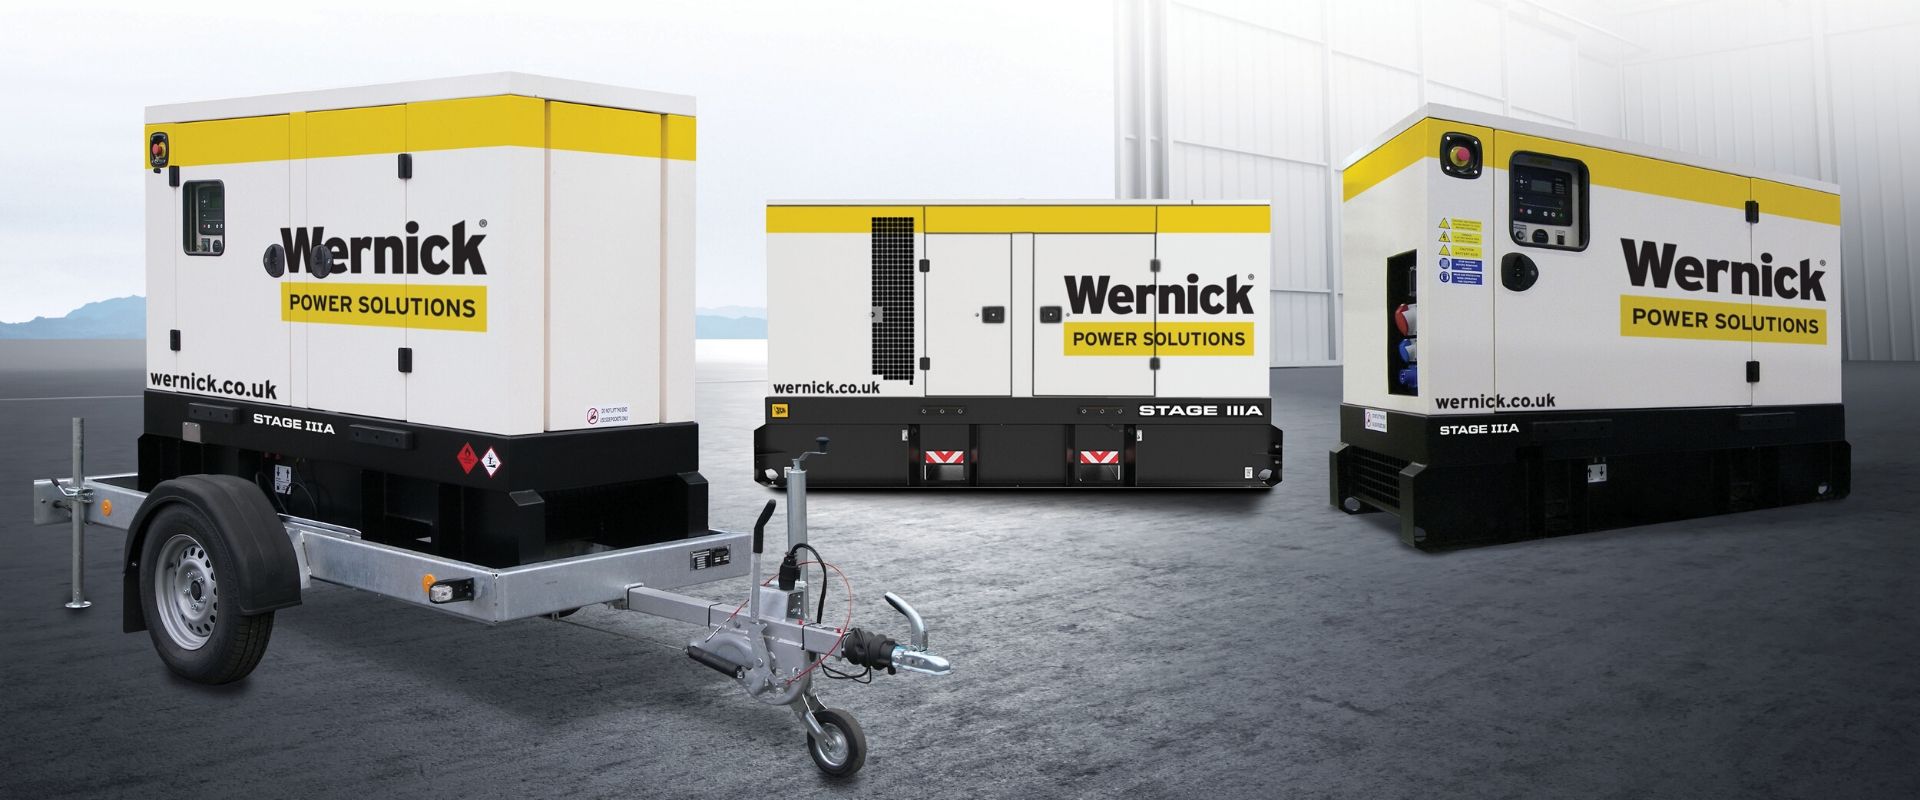 Wernick Power Solutions Generators